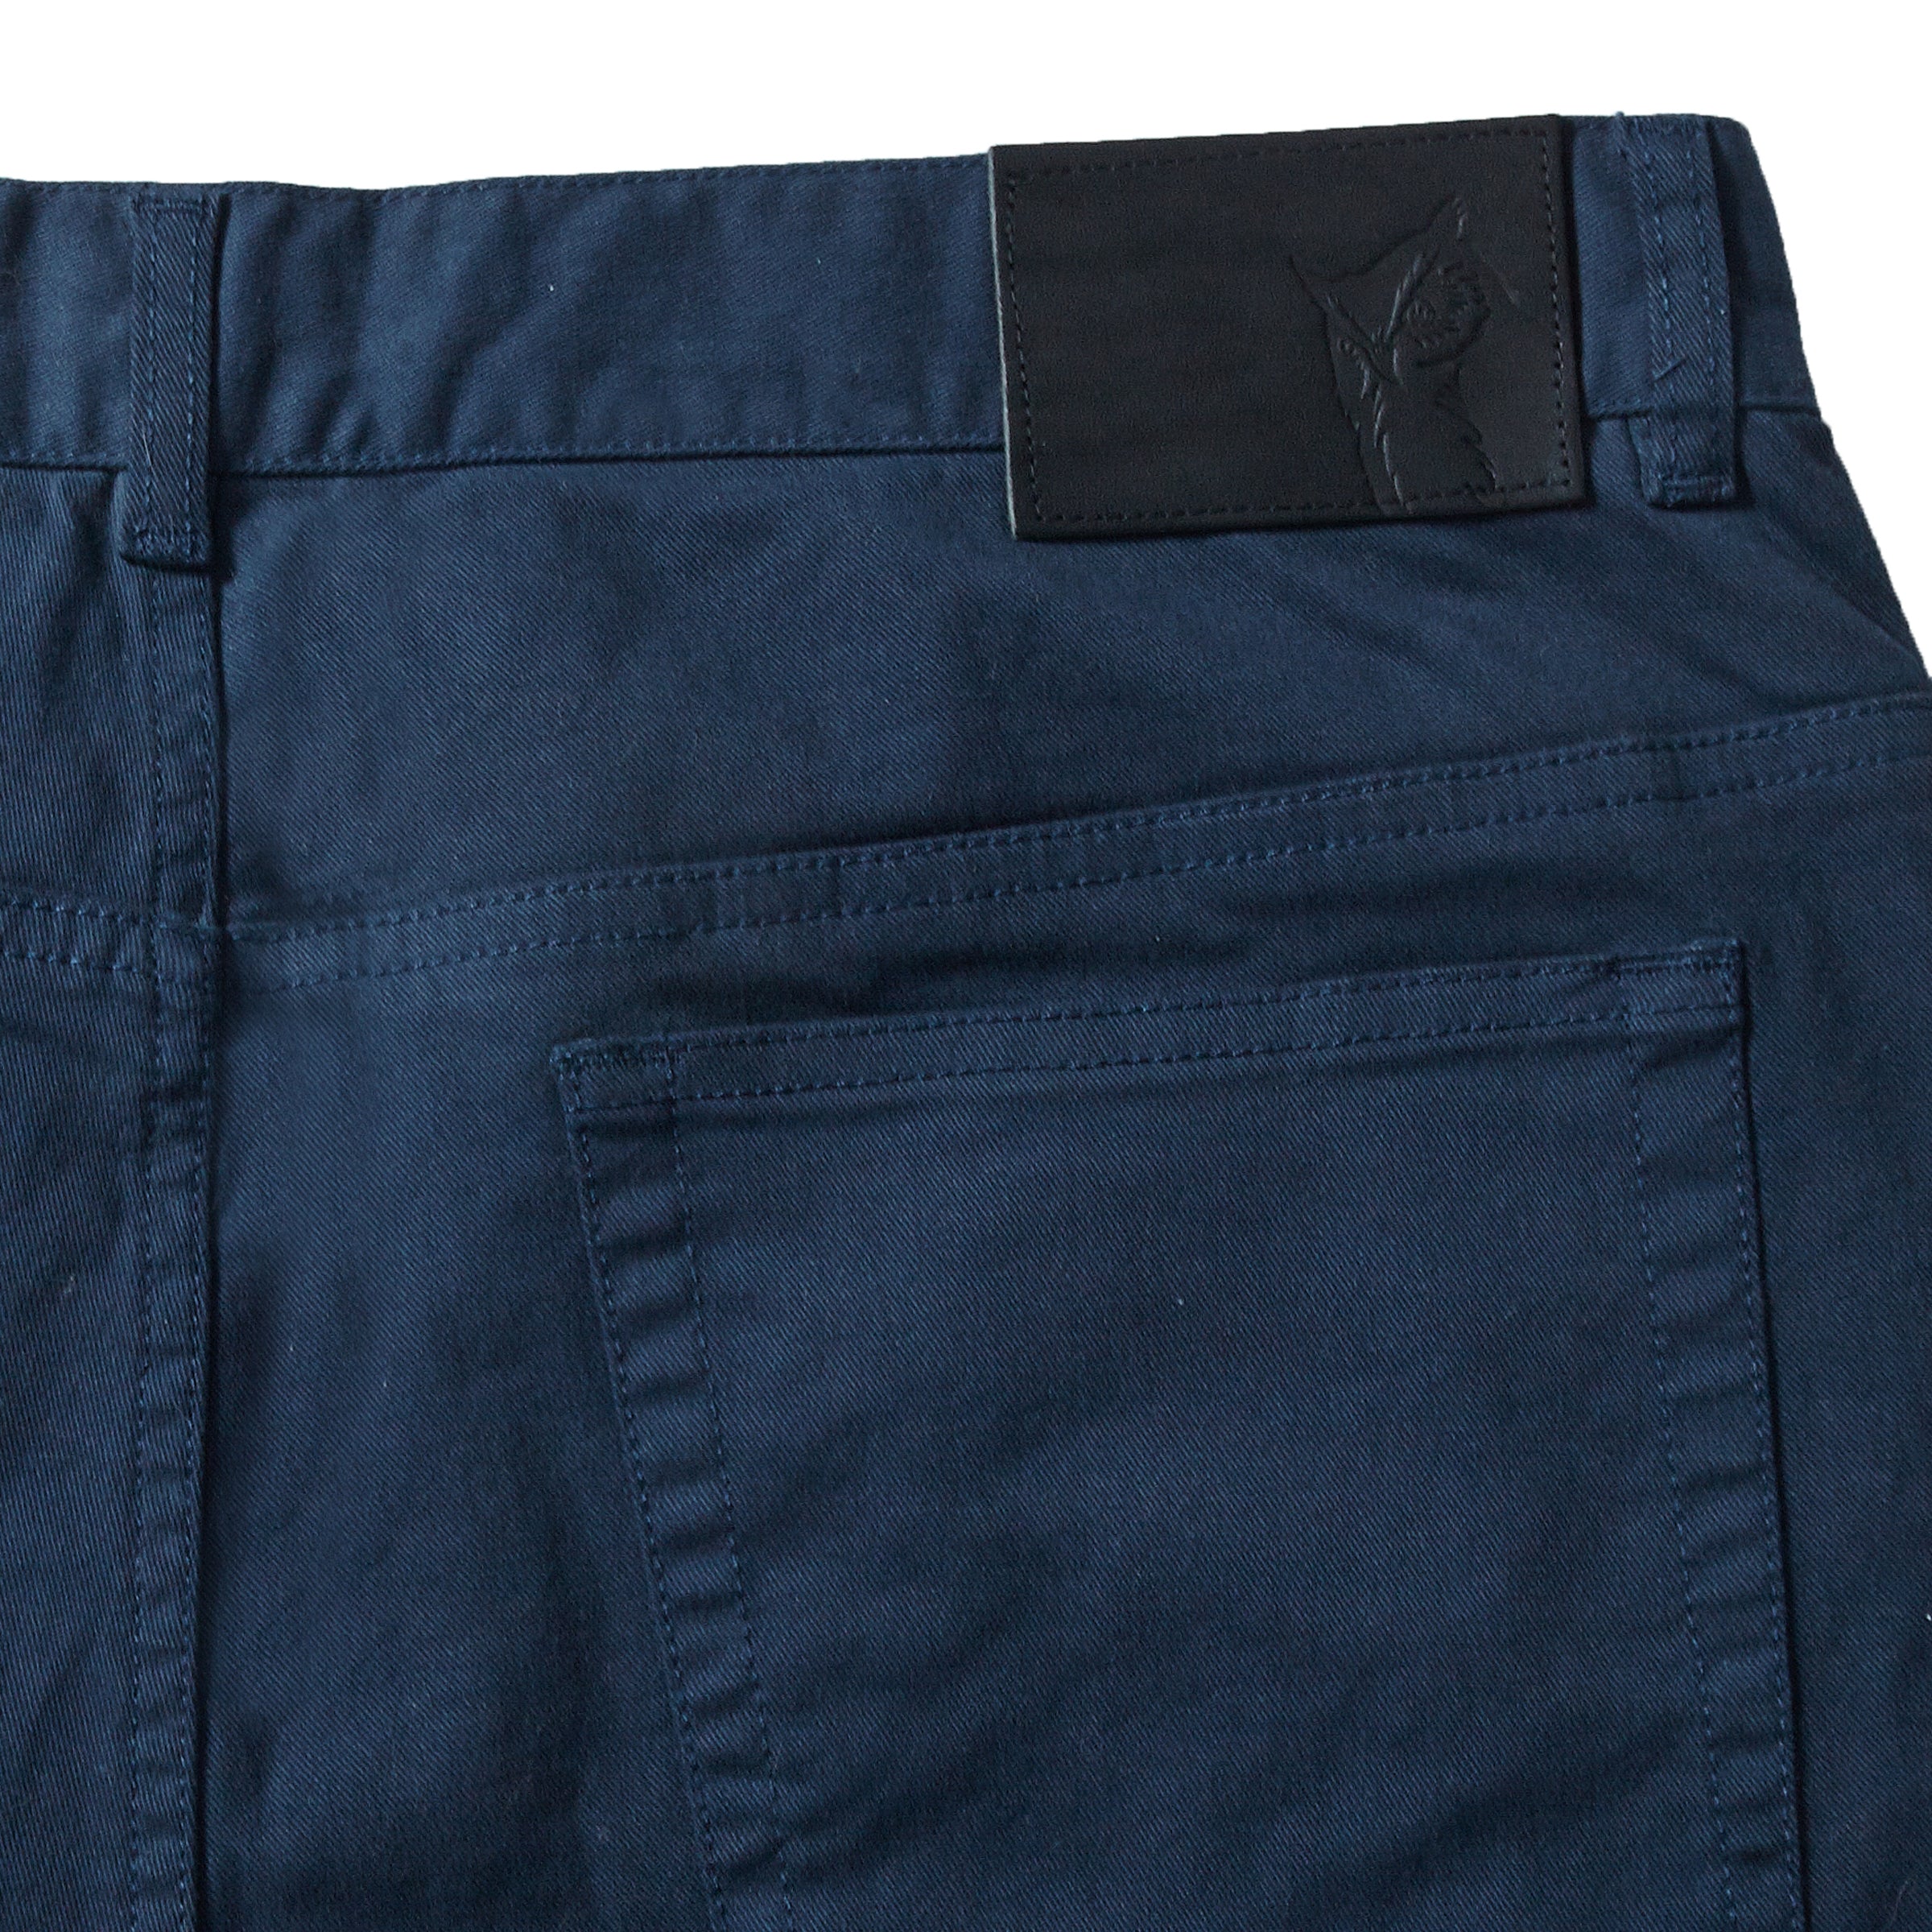 Norwood 5 Pocket Stretch Pants (Slim Fit) - Midnight Navy